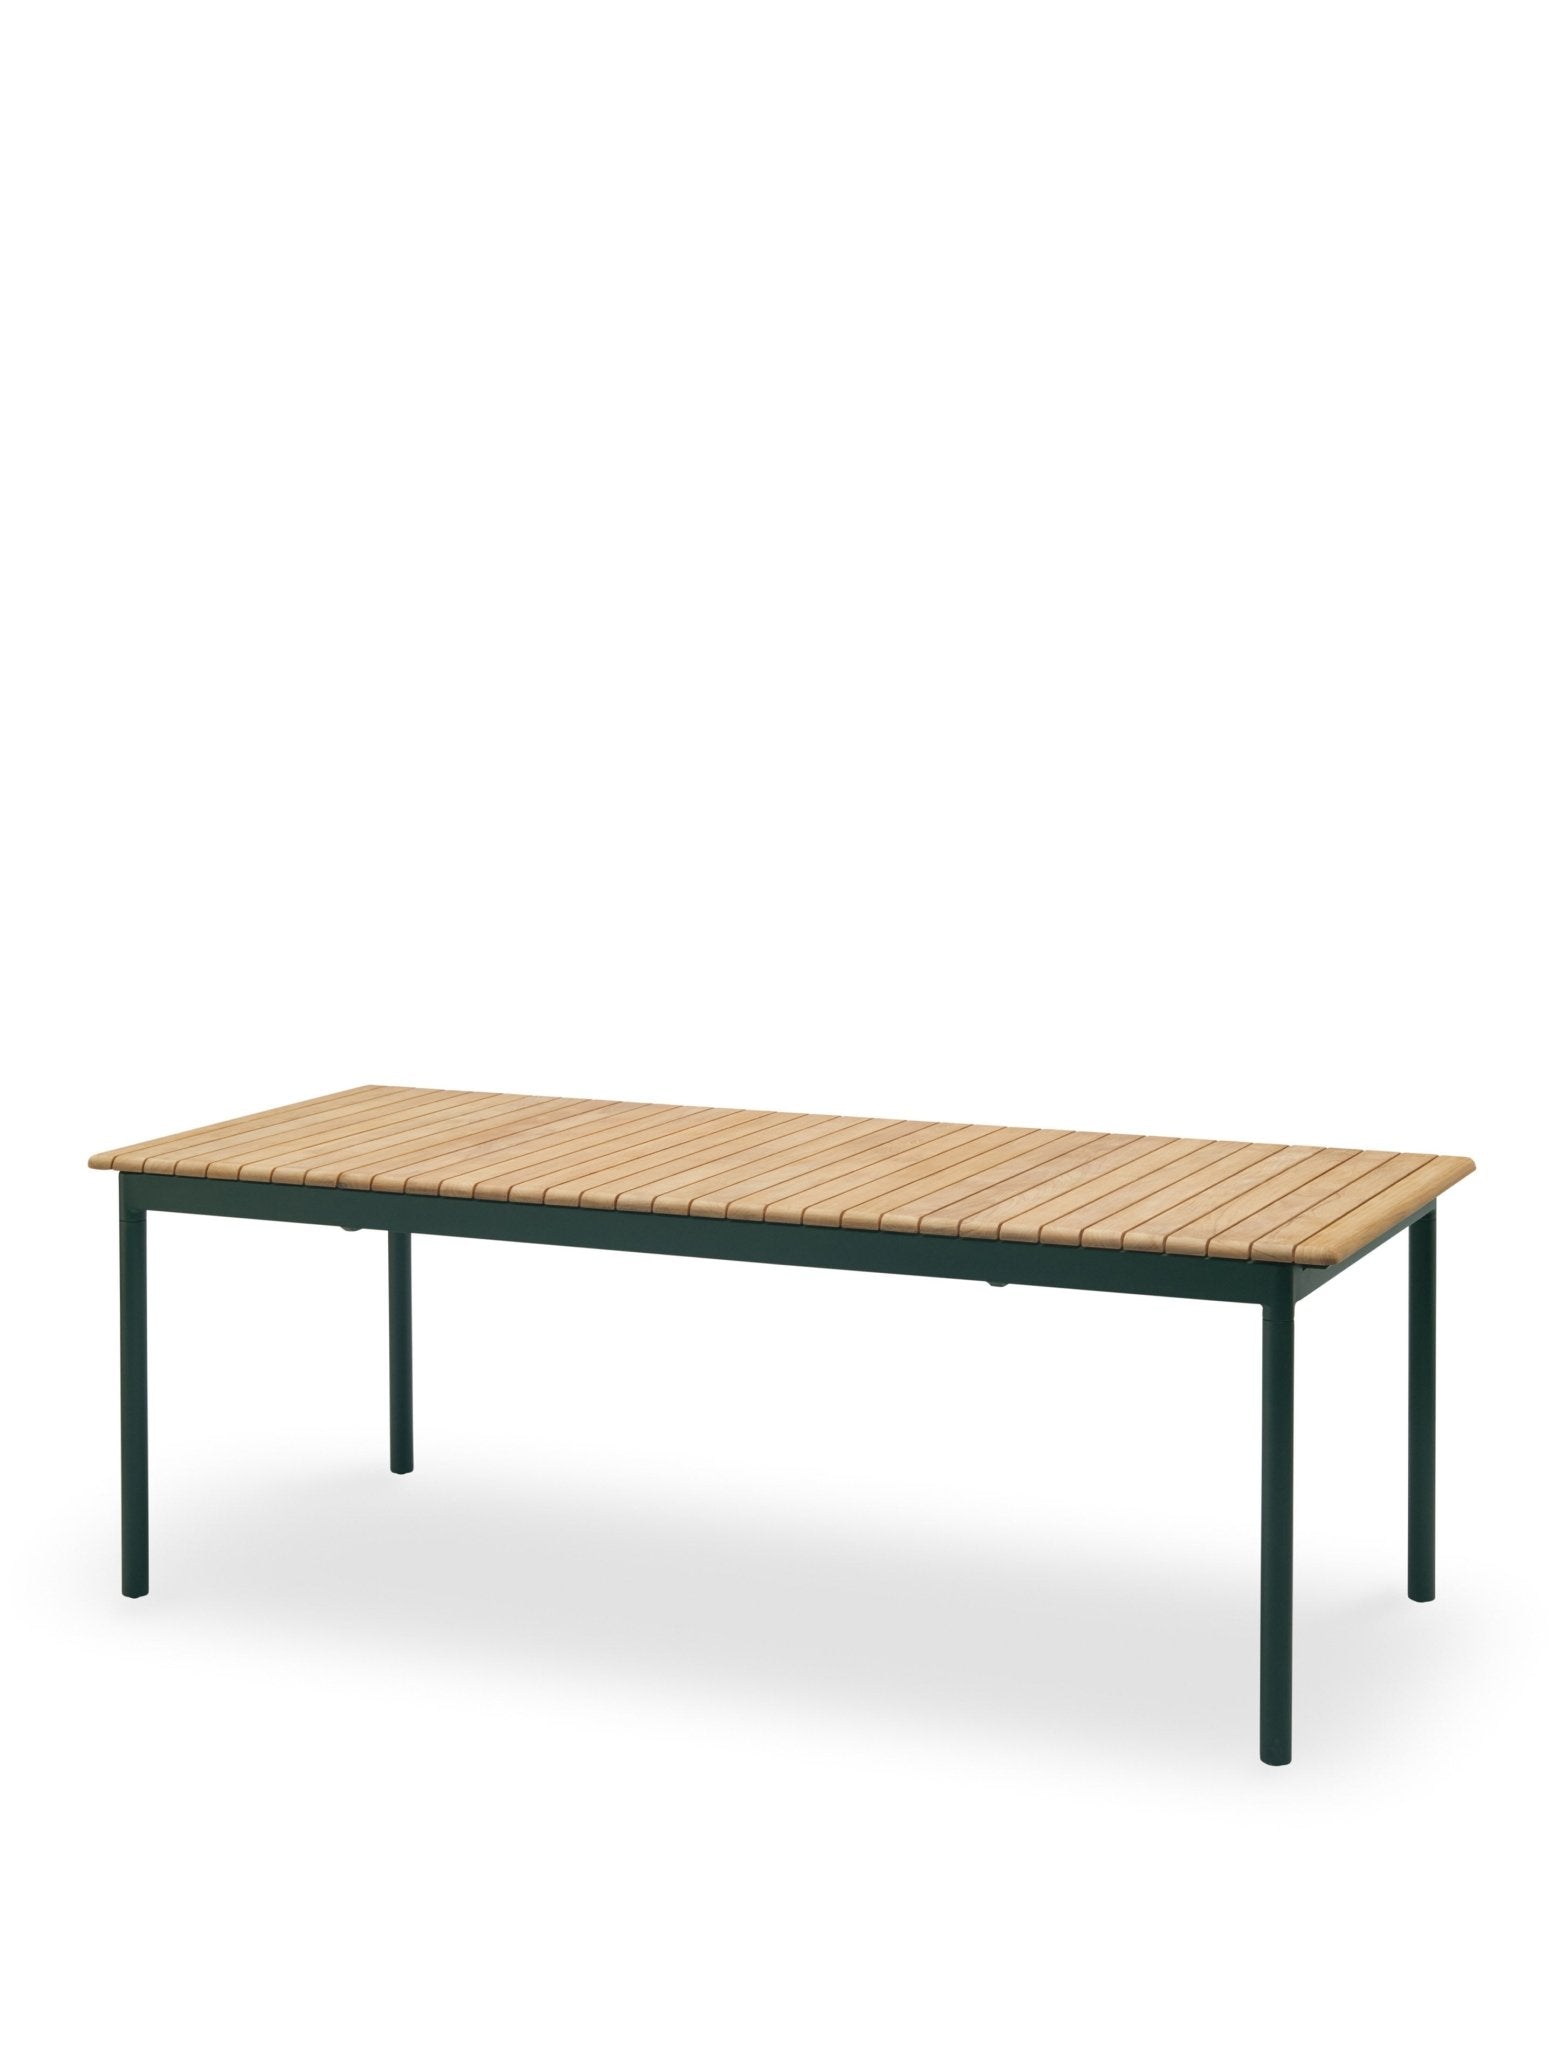 Pelago Table - Hunter Green / No Extension Plate